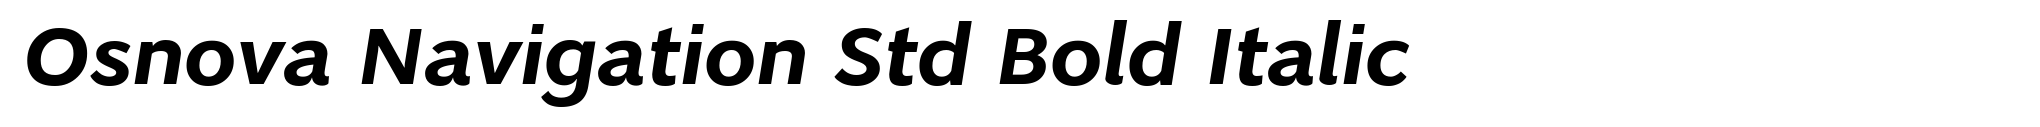 Osnova Navigation Std Bold Italic image